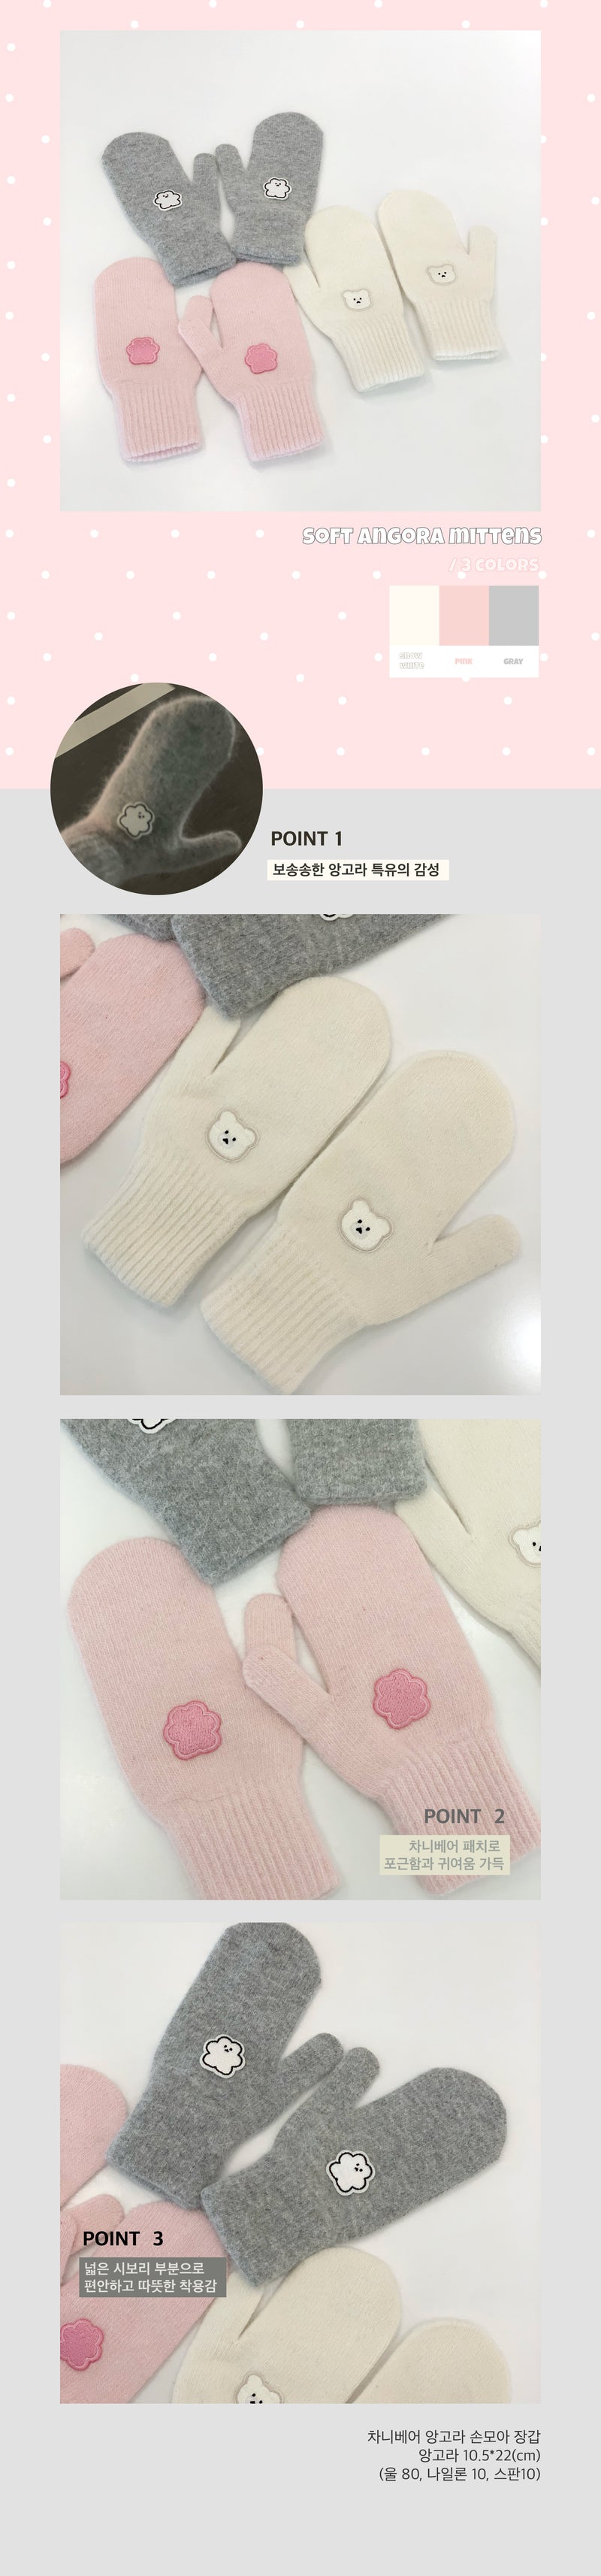 chanibear soft angora mittens (3color-gray)